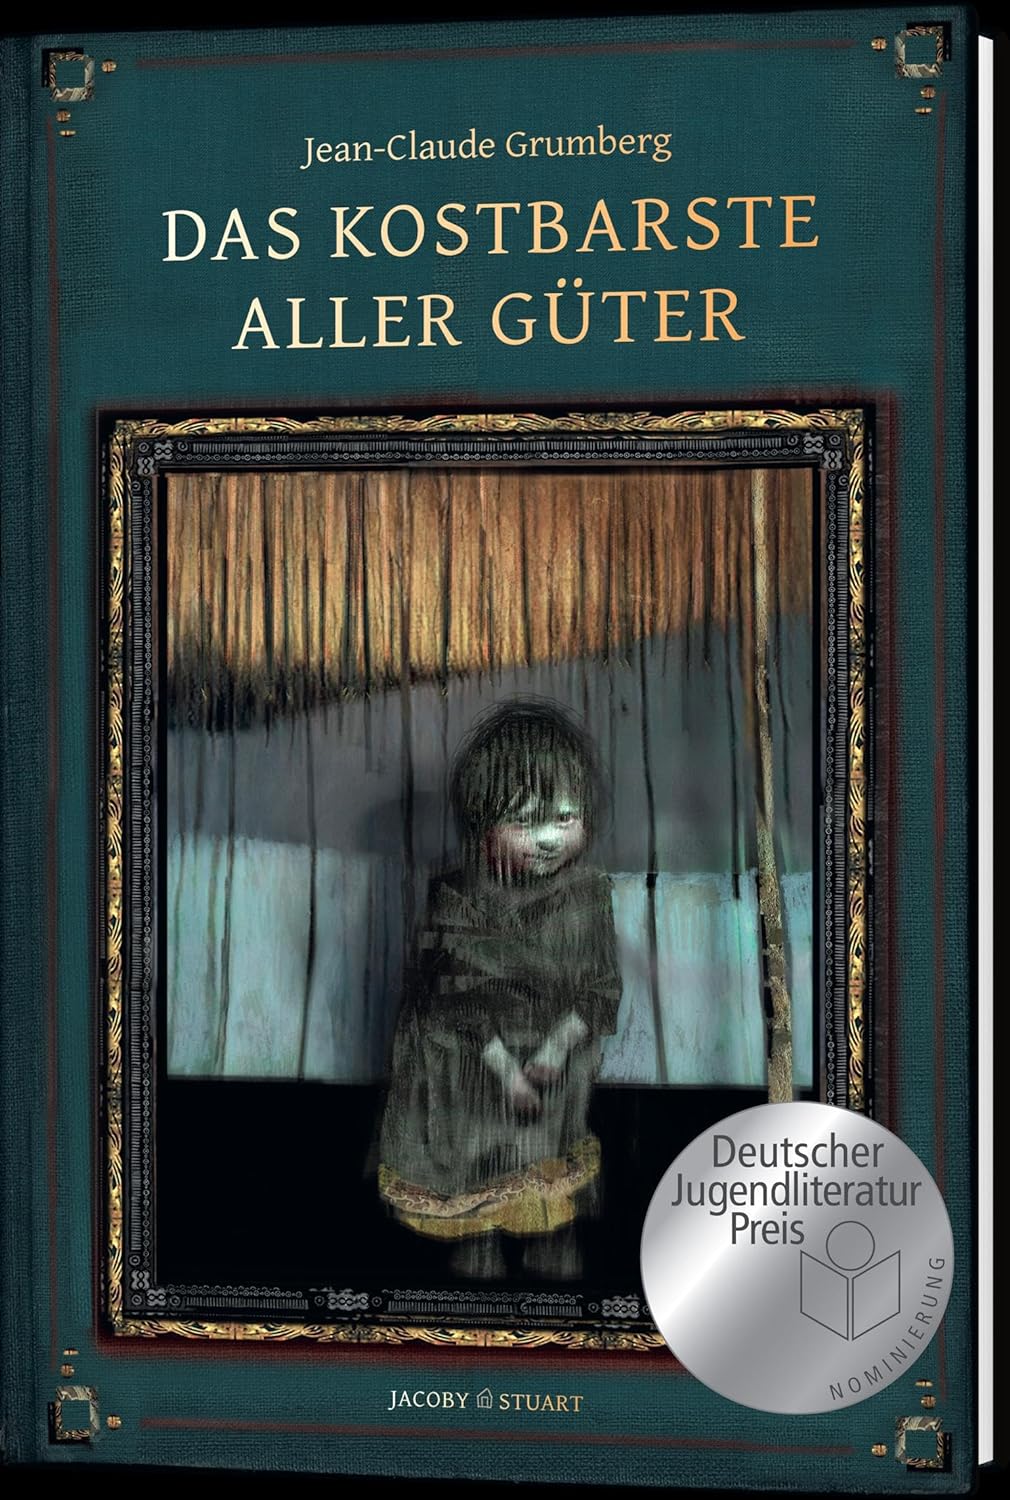 Jean-Claude Grumberg: Das kostbarste aller Güter (Hardcover, German language, Verlagshaus Jacoby & Stuart)